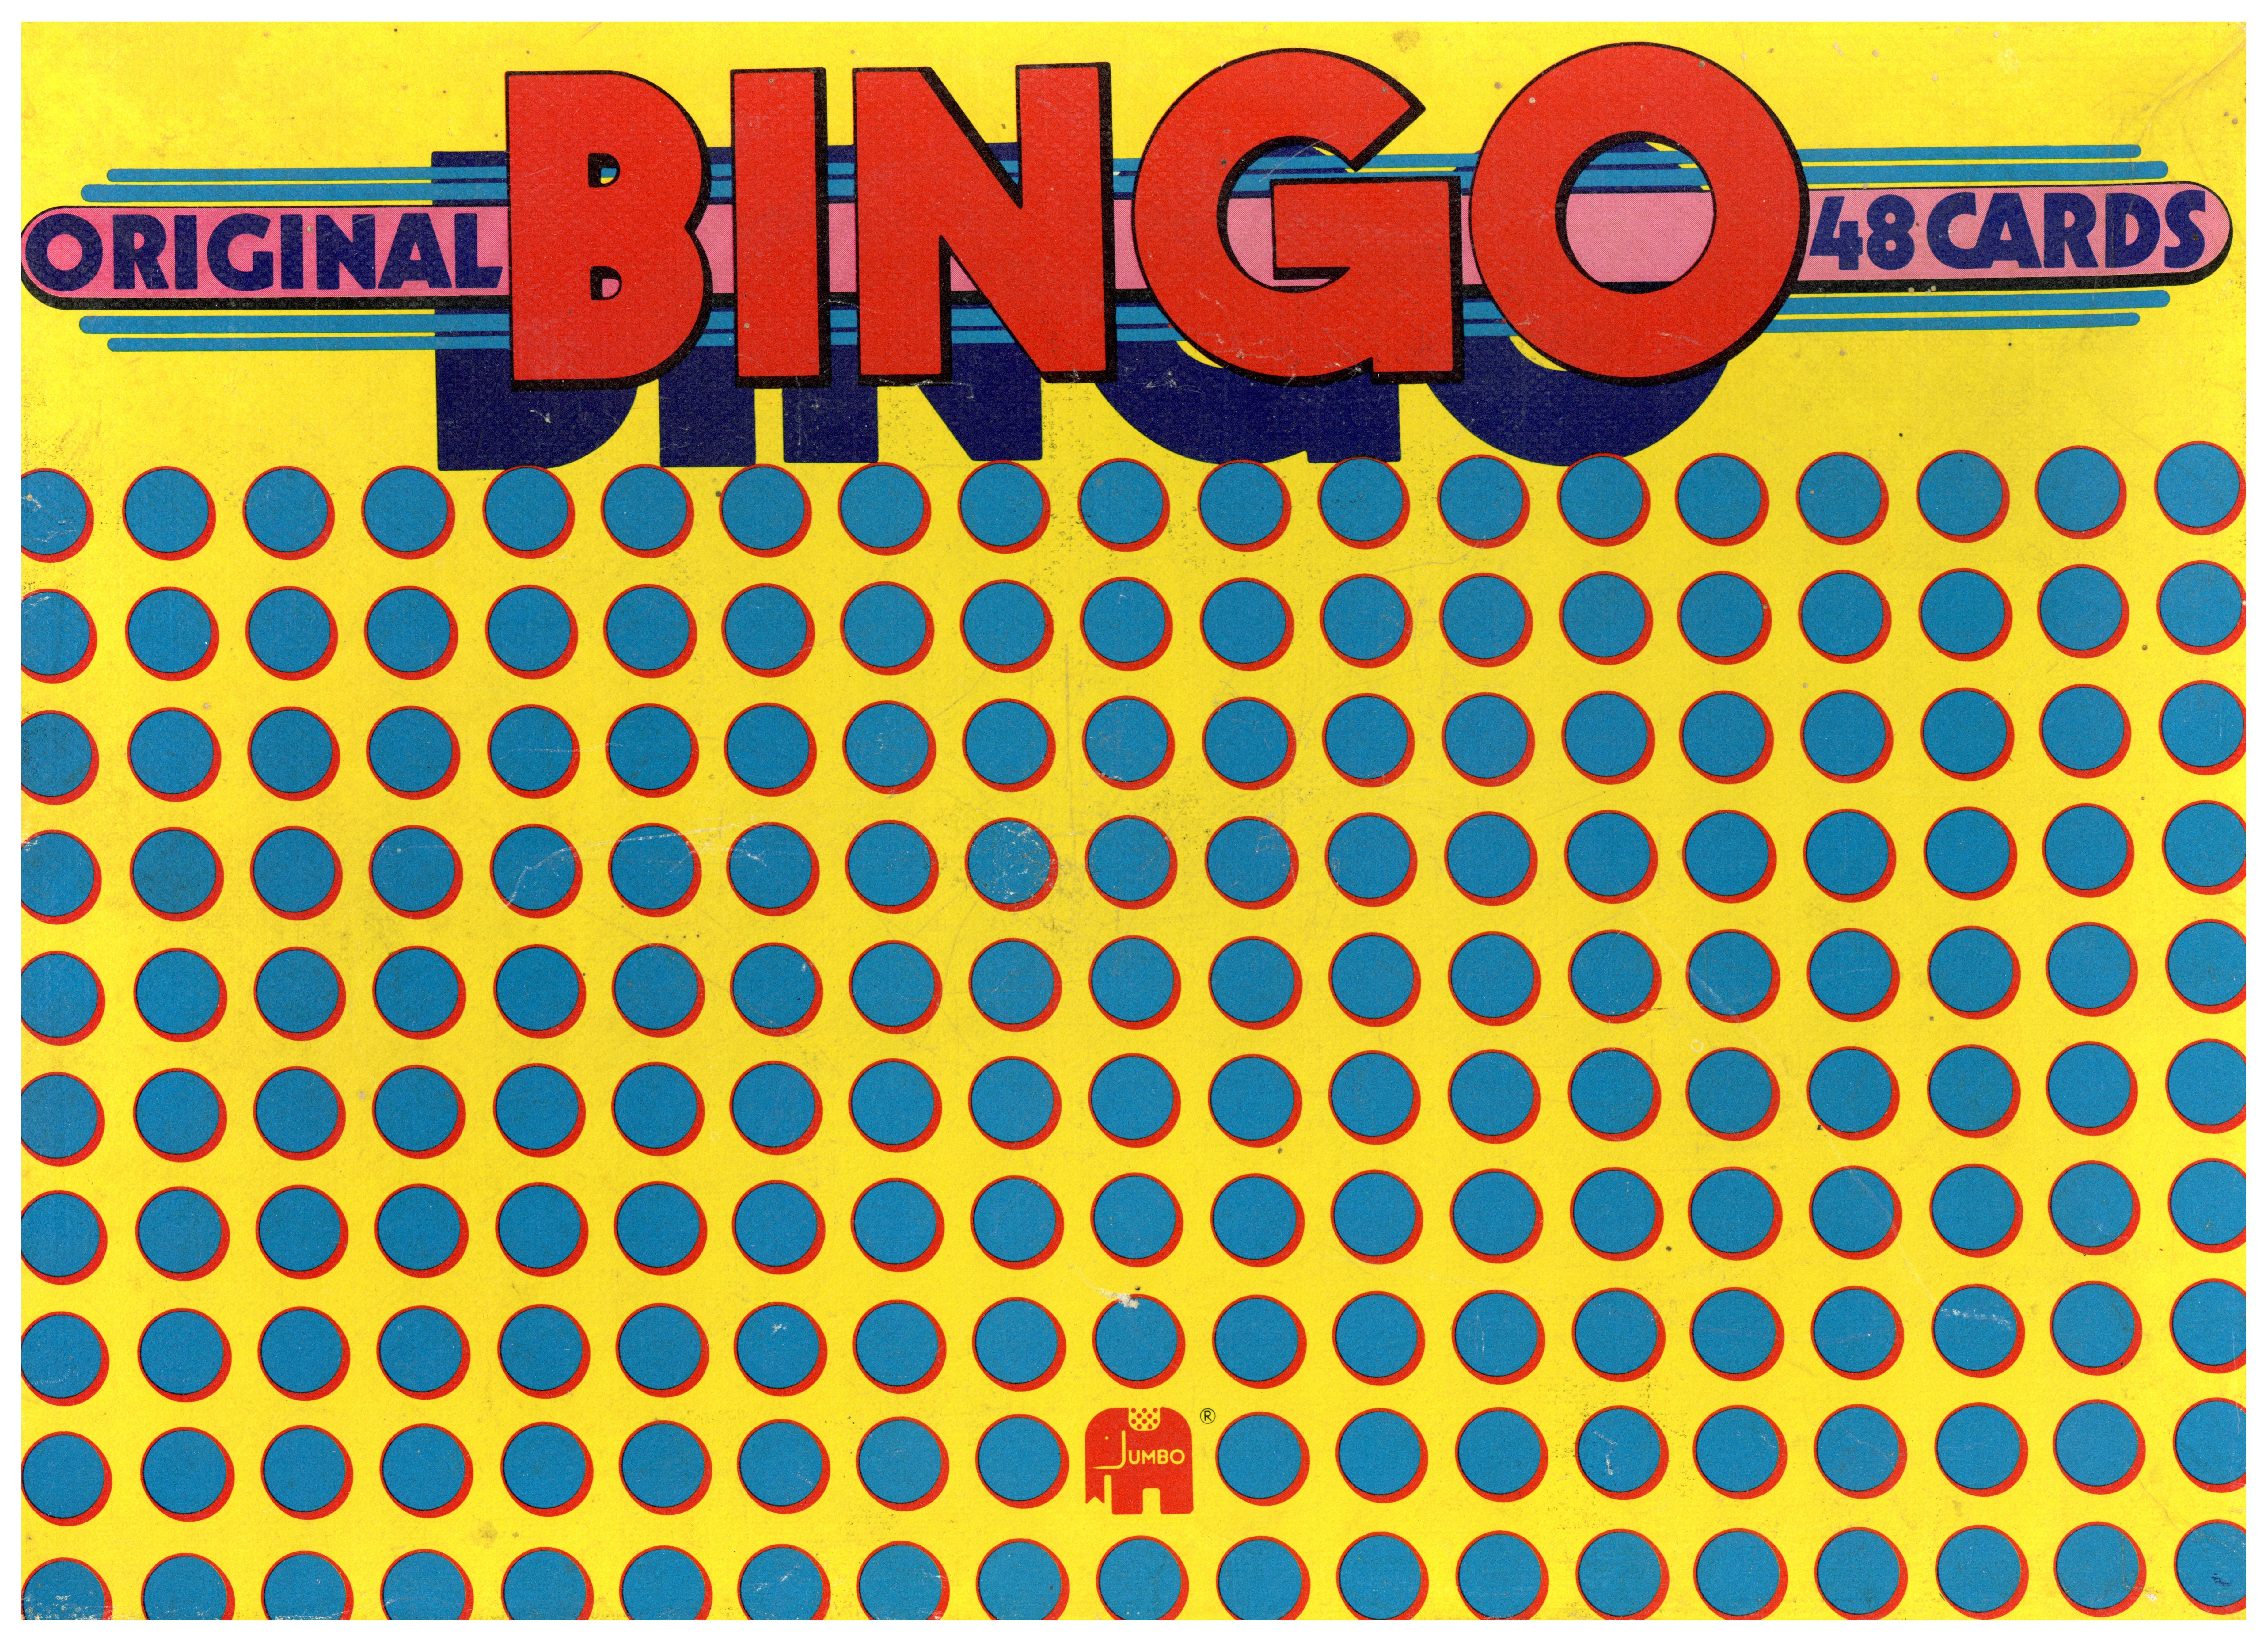 Bingo Original